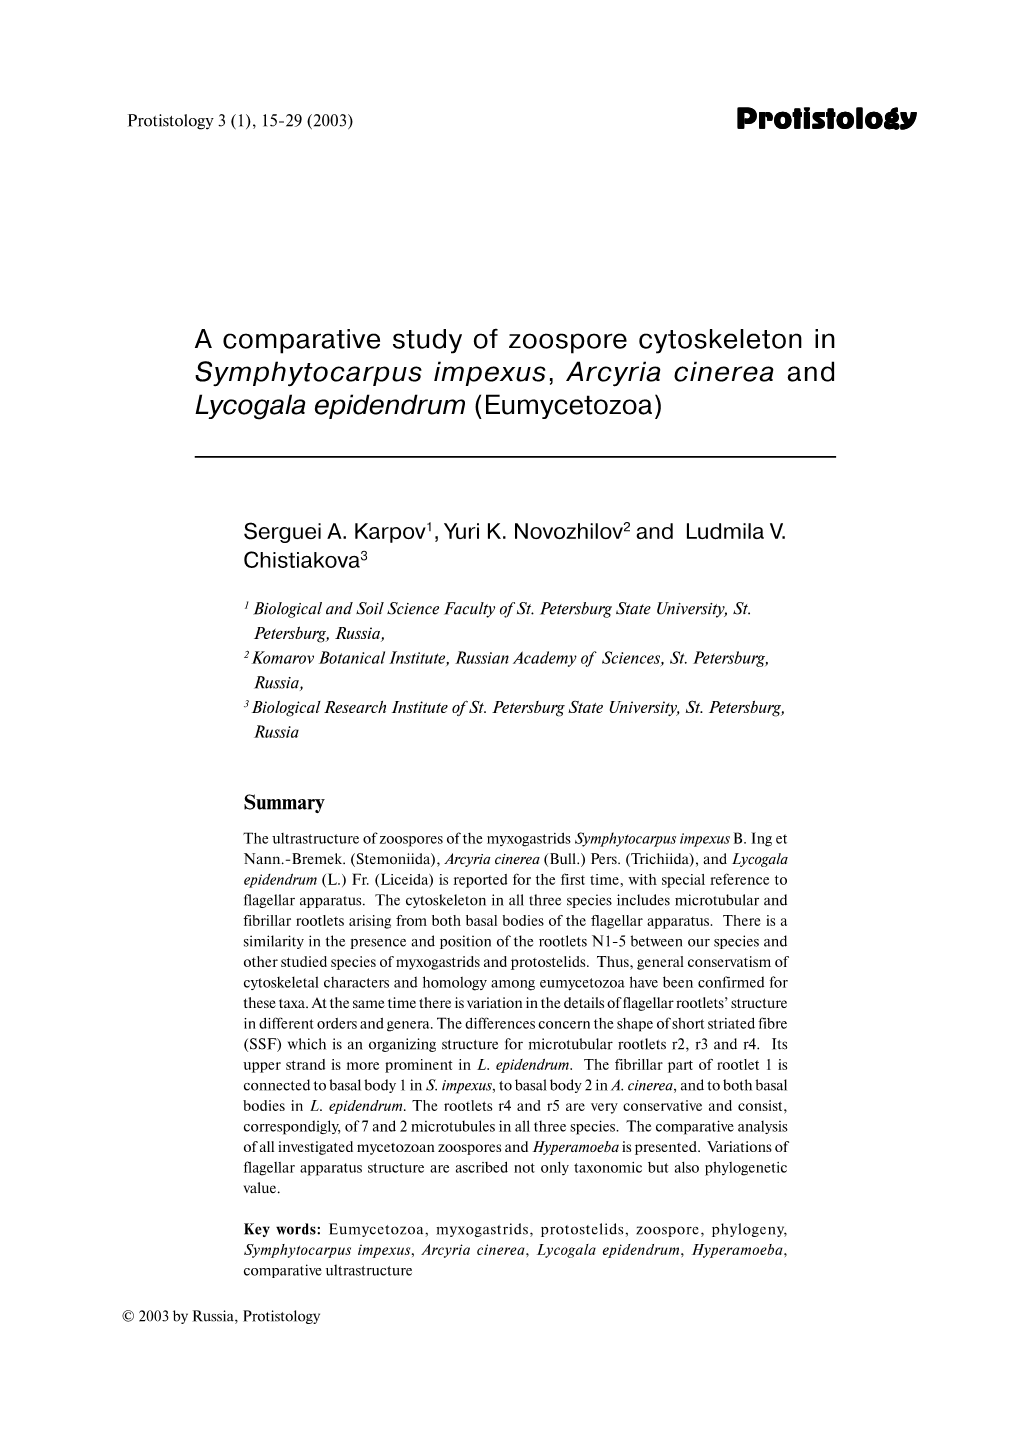 A Comparative Study of Zoospore Cytoskeleton in Symphytocarpus Impexus, Arcyria Cinerea and Lycogala Epidendrum (Eumycetozoa)